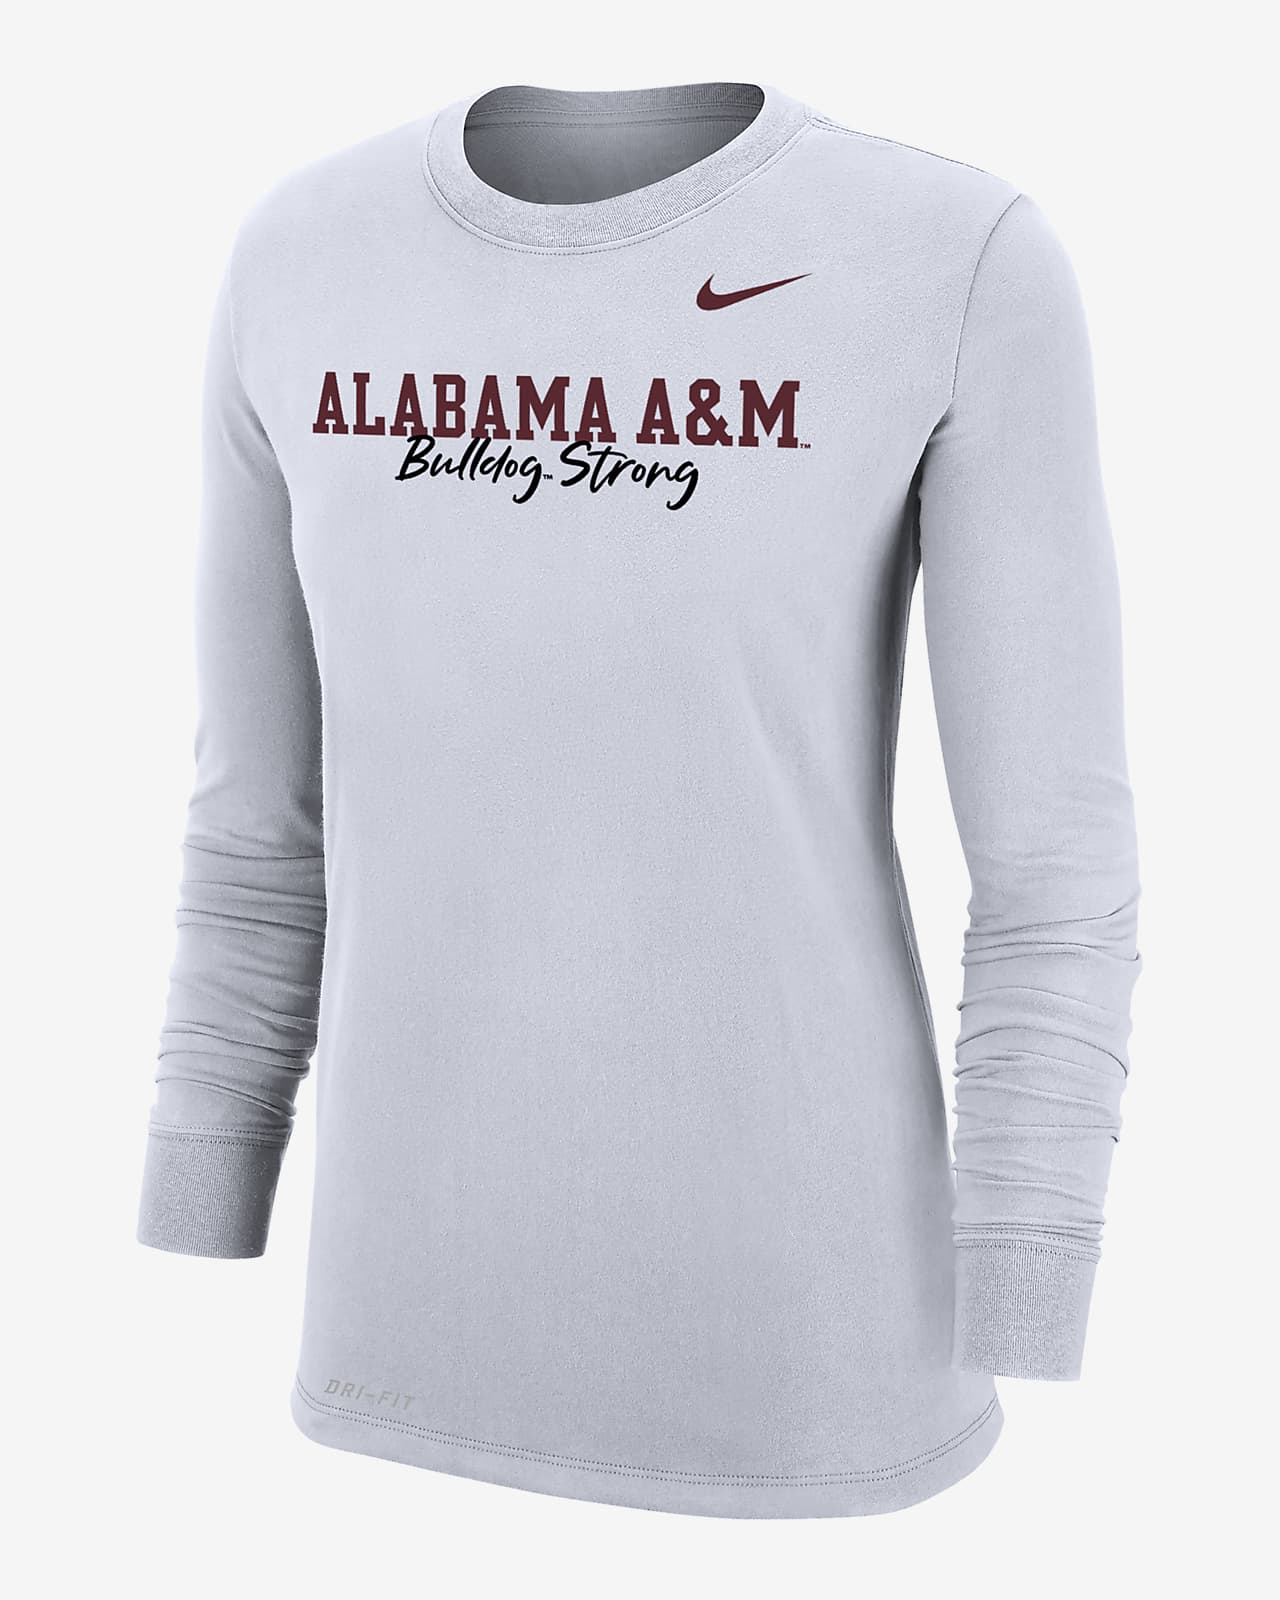 Nike College Dri-FIT 365 Alabama A&M Women's Long-Sleeve T-Shirt